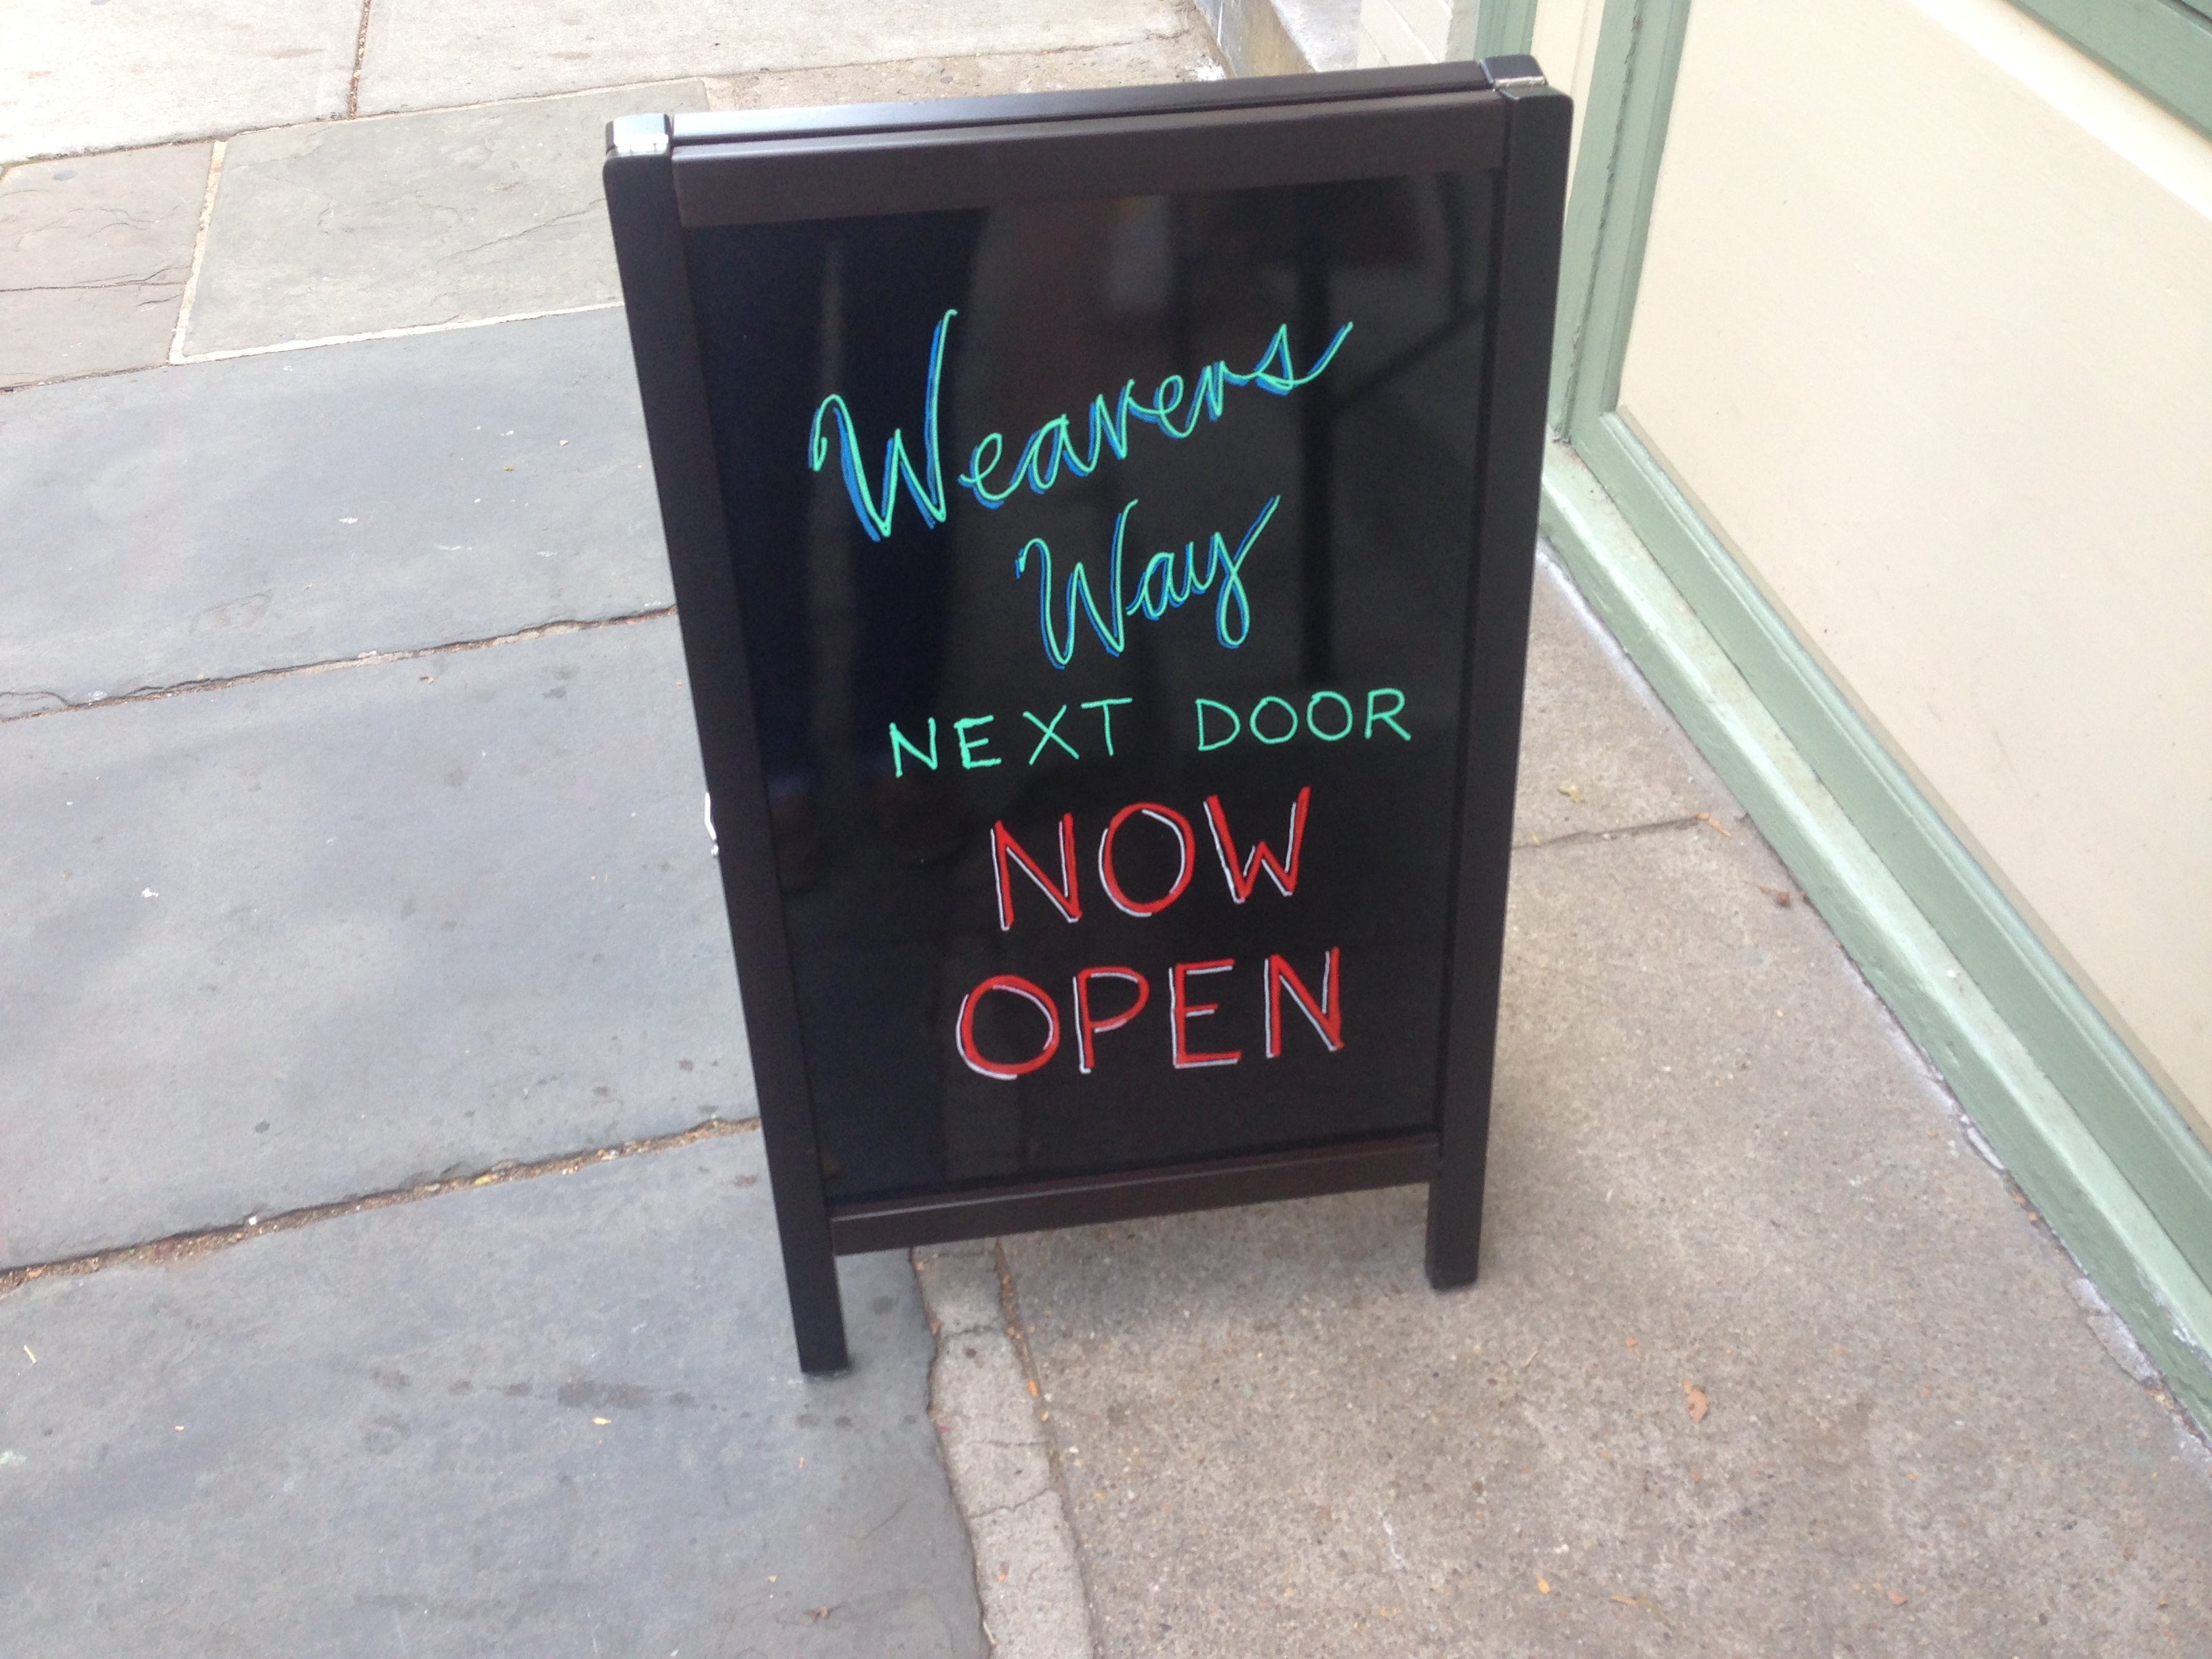  The new wellness store had its soft opening on Monday. (Neema Roshania/WHYY) 